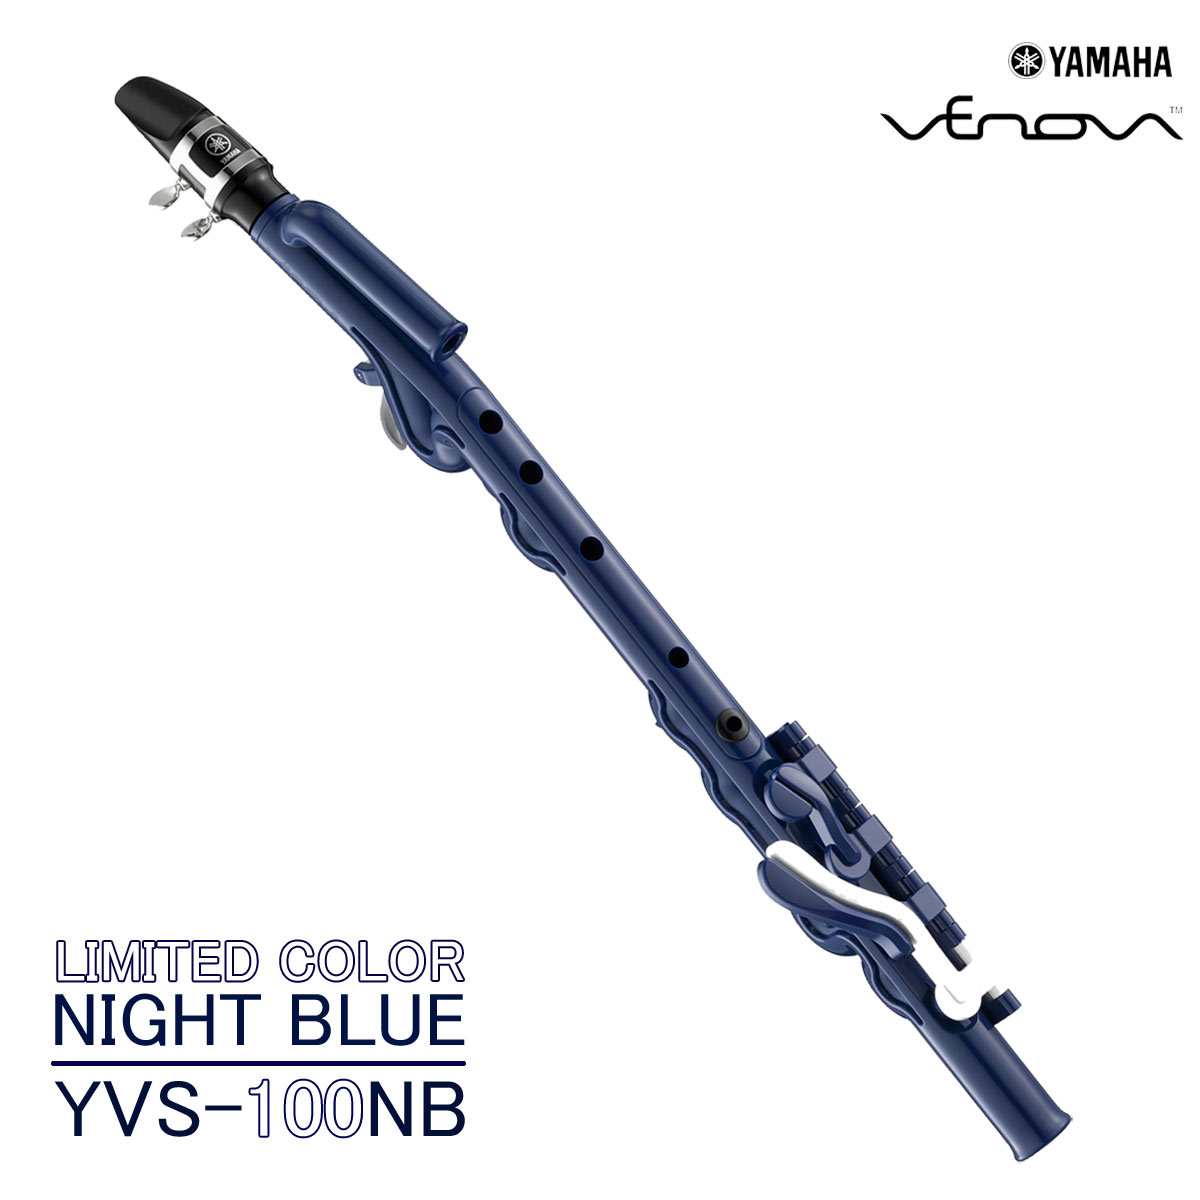 YAMAHA / Venova ヤマハ YVS-100NB ヴェノーヴァ 限定カラーナイトブルー 専用ケース付 《予約注文/12月8日発売》